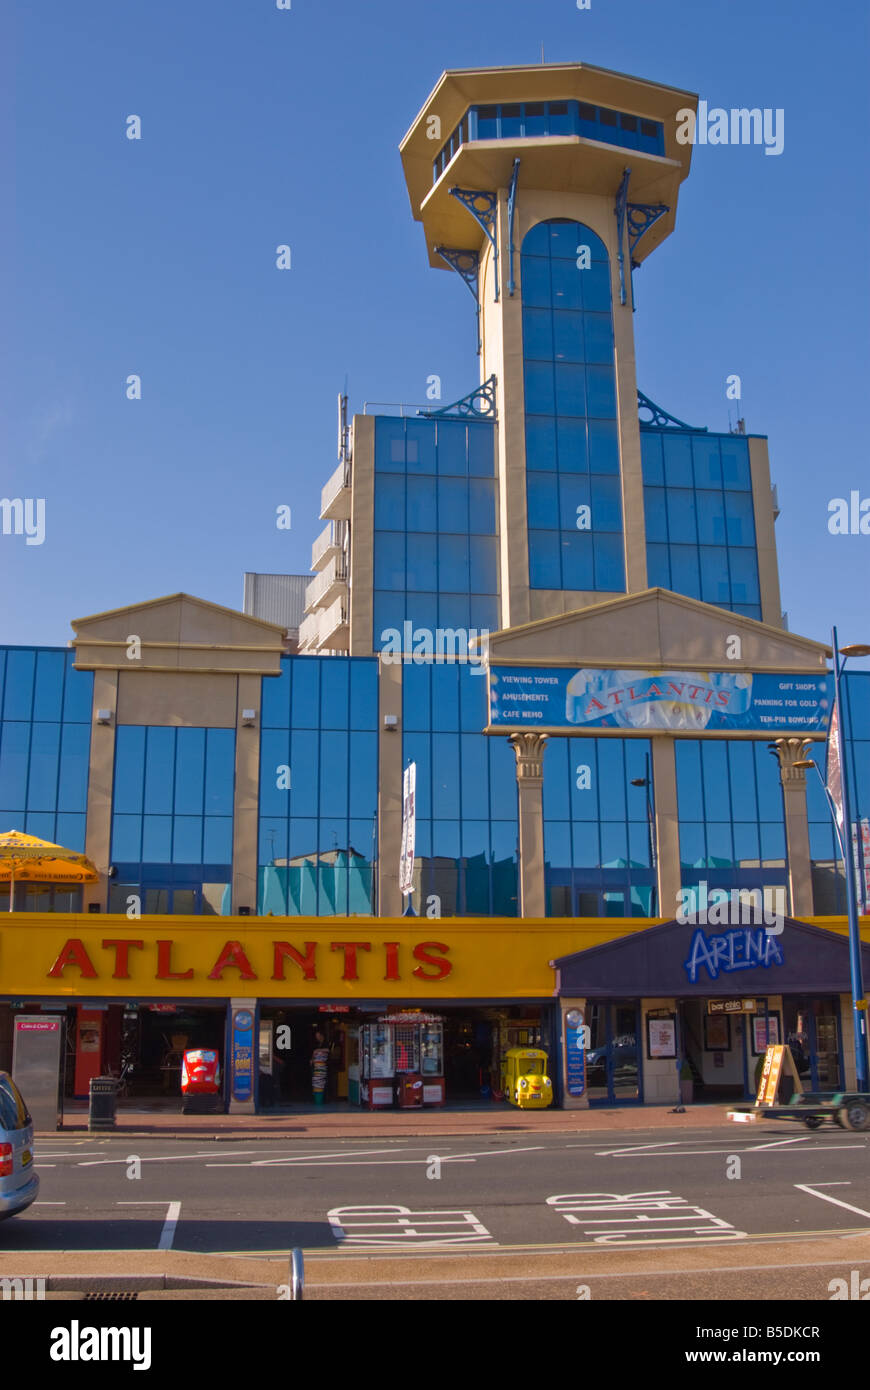 Atlantis Amusement Arcade Arena along the golden mile seafront promenade in Great Yarmouth,Norfolk,Uk Stock Photo